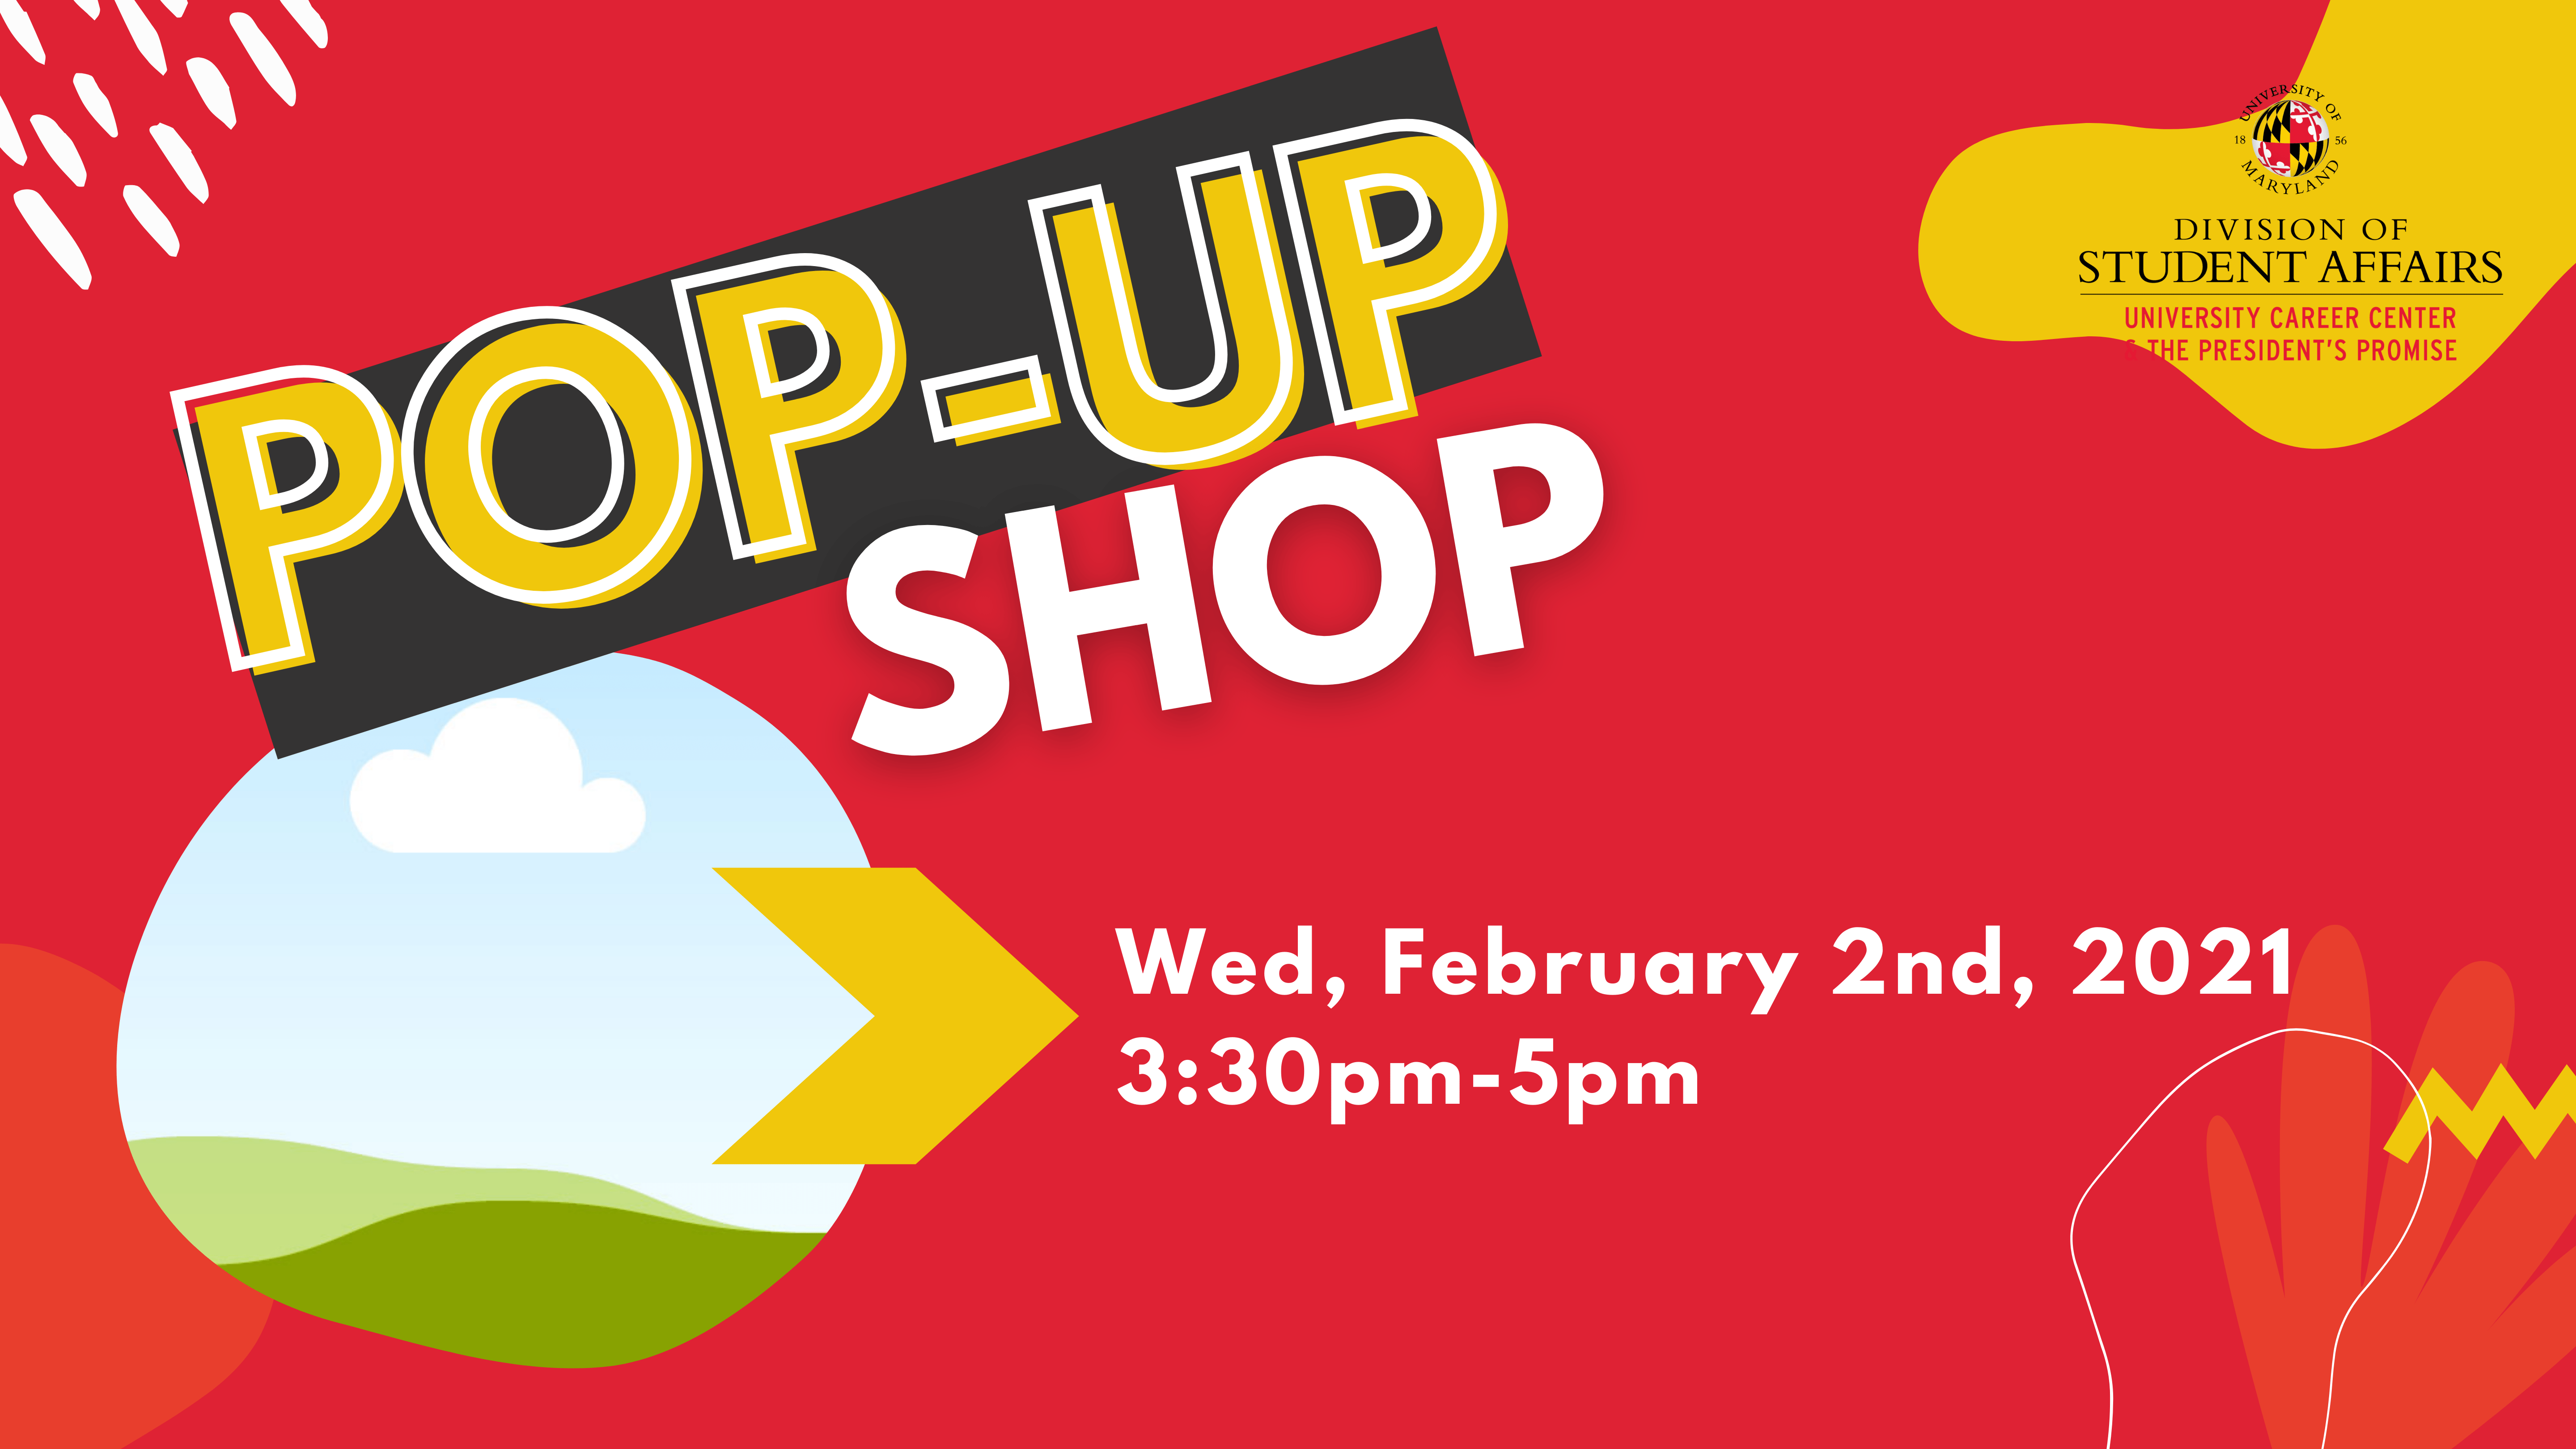 Thumbnail: Pop-Up Shop